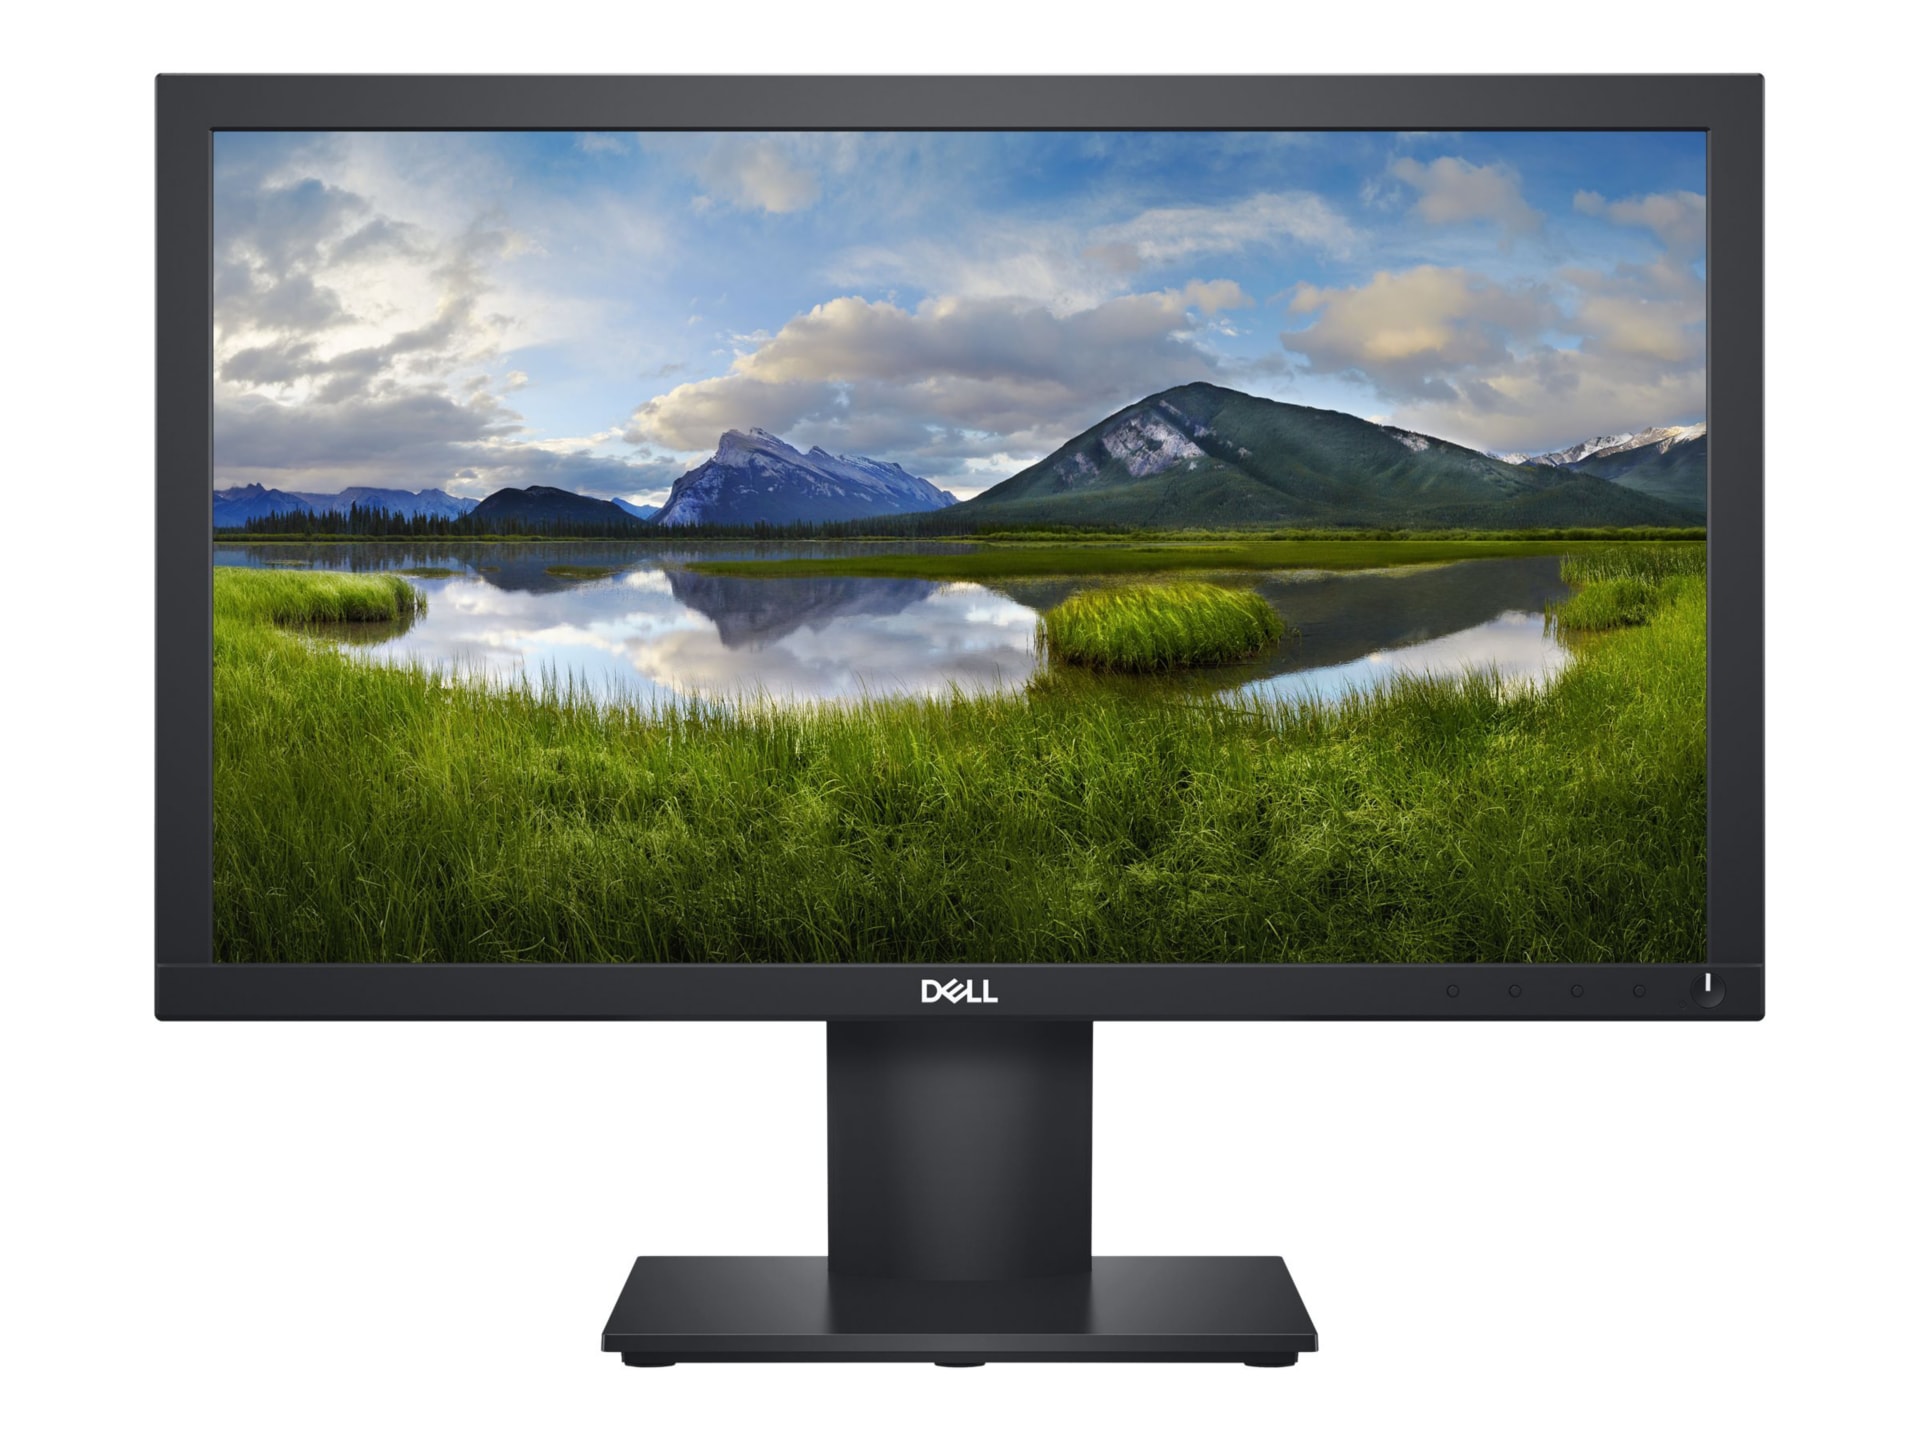 Dell E2020H 20" 1600 x 900 TN LED-Backlit LCD Monitor